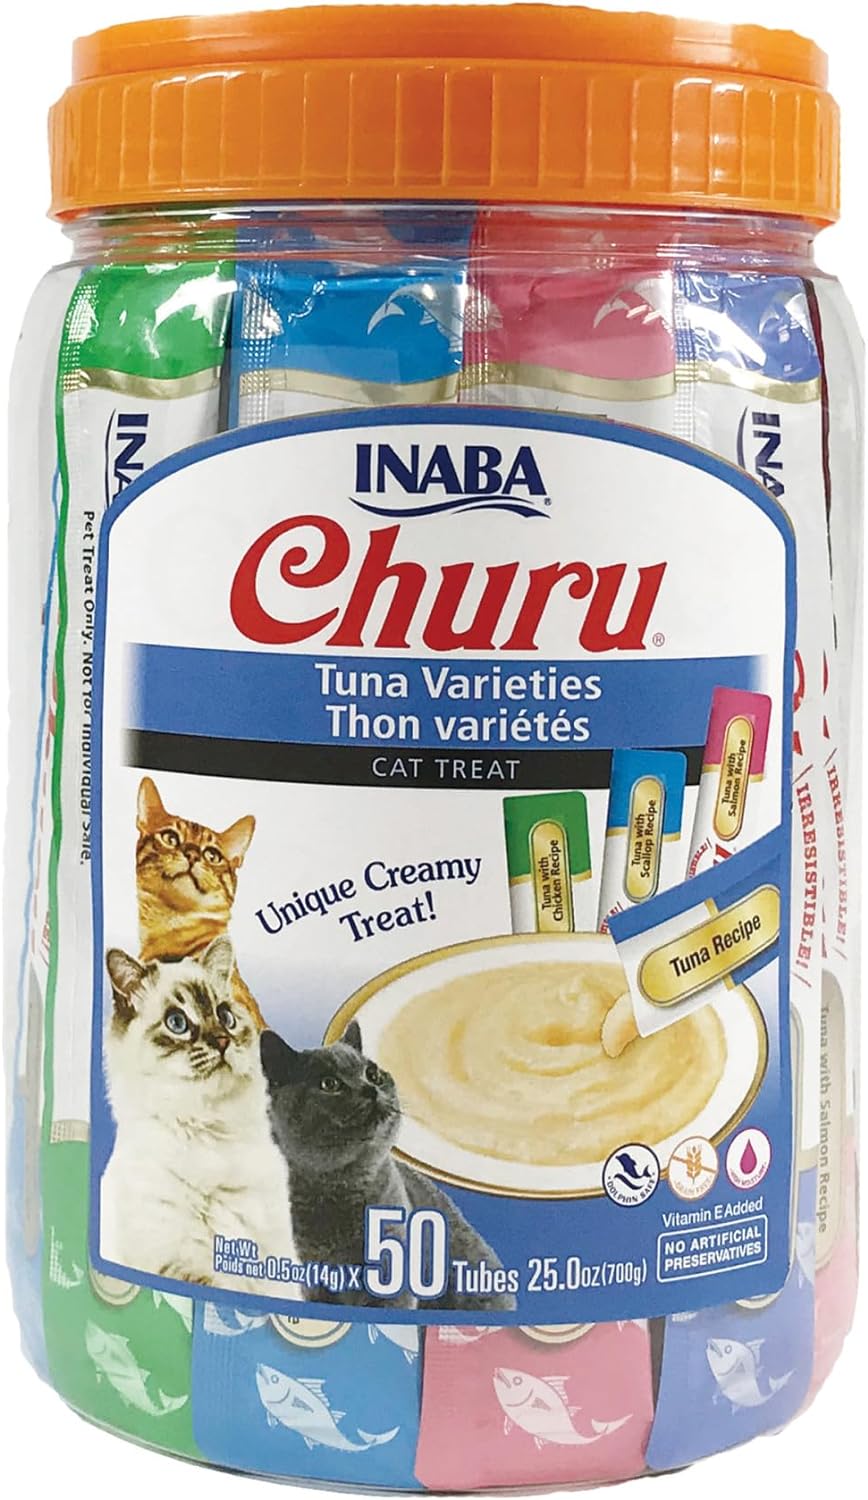 INABA Churu Cat Treats, Grain-Free, Lickable, Squeezable Creamy Purée Cat Treat/Topper with Vitamin E & Taurine, 0.5 Ounces Each Tube, 50 Tubes, Tuna Variety